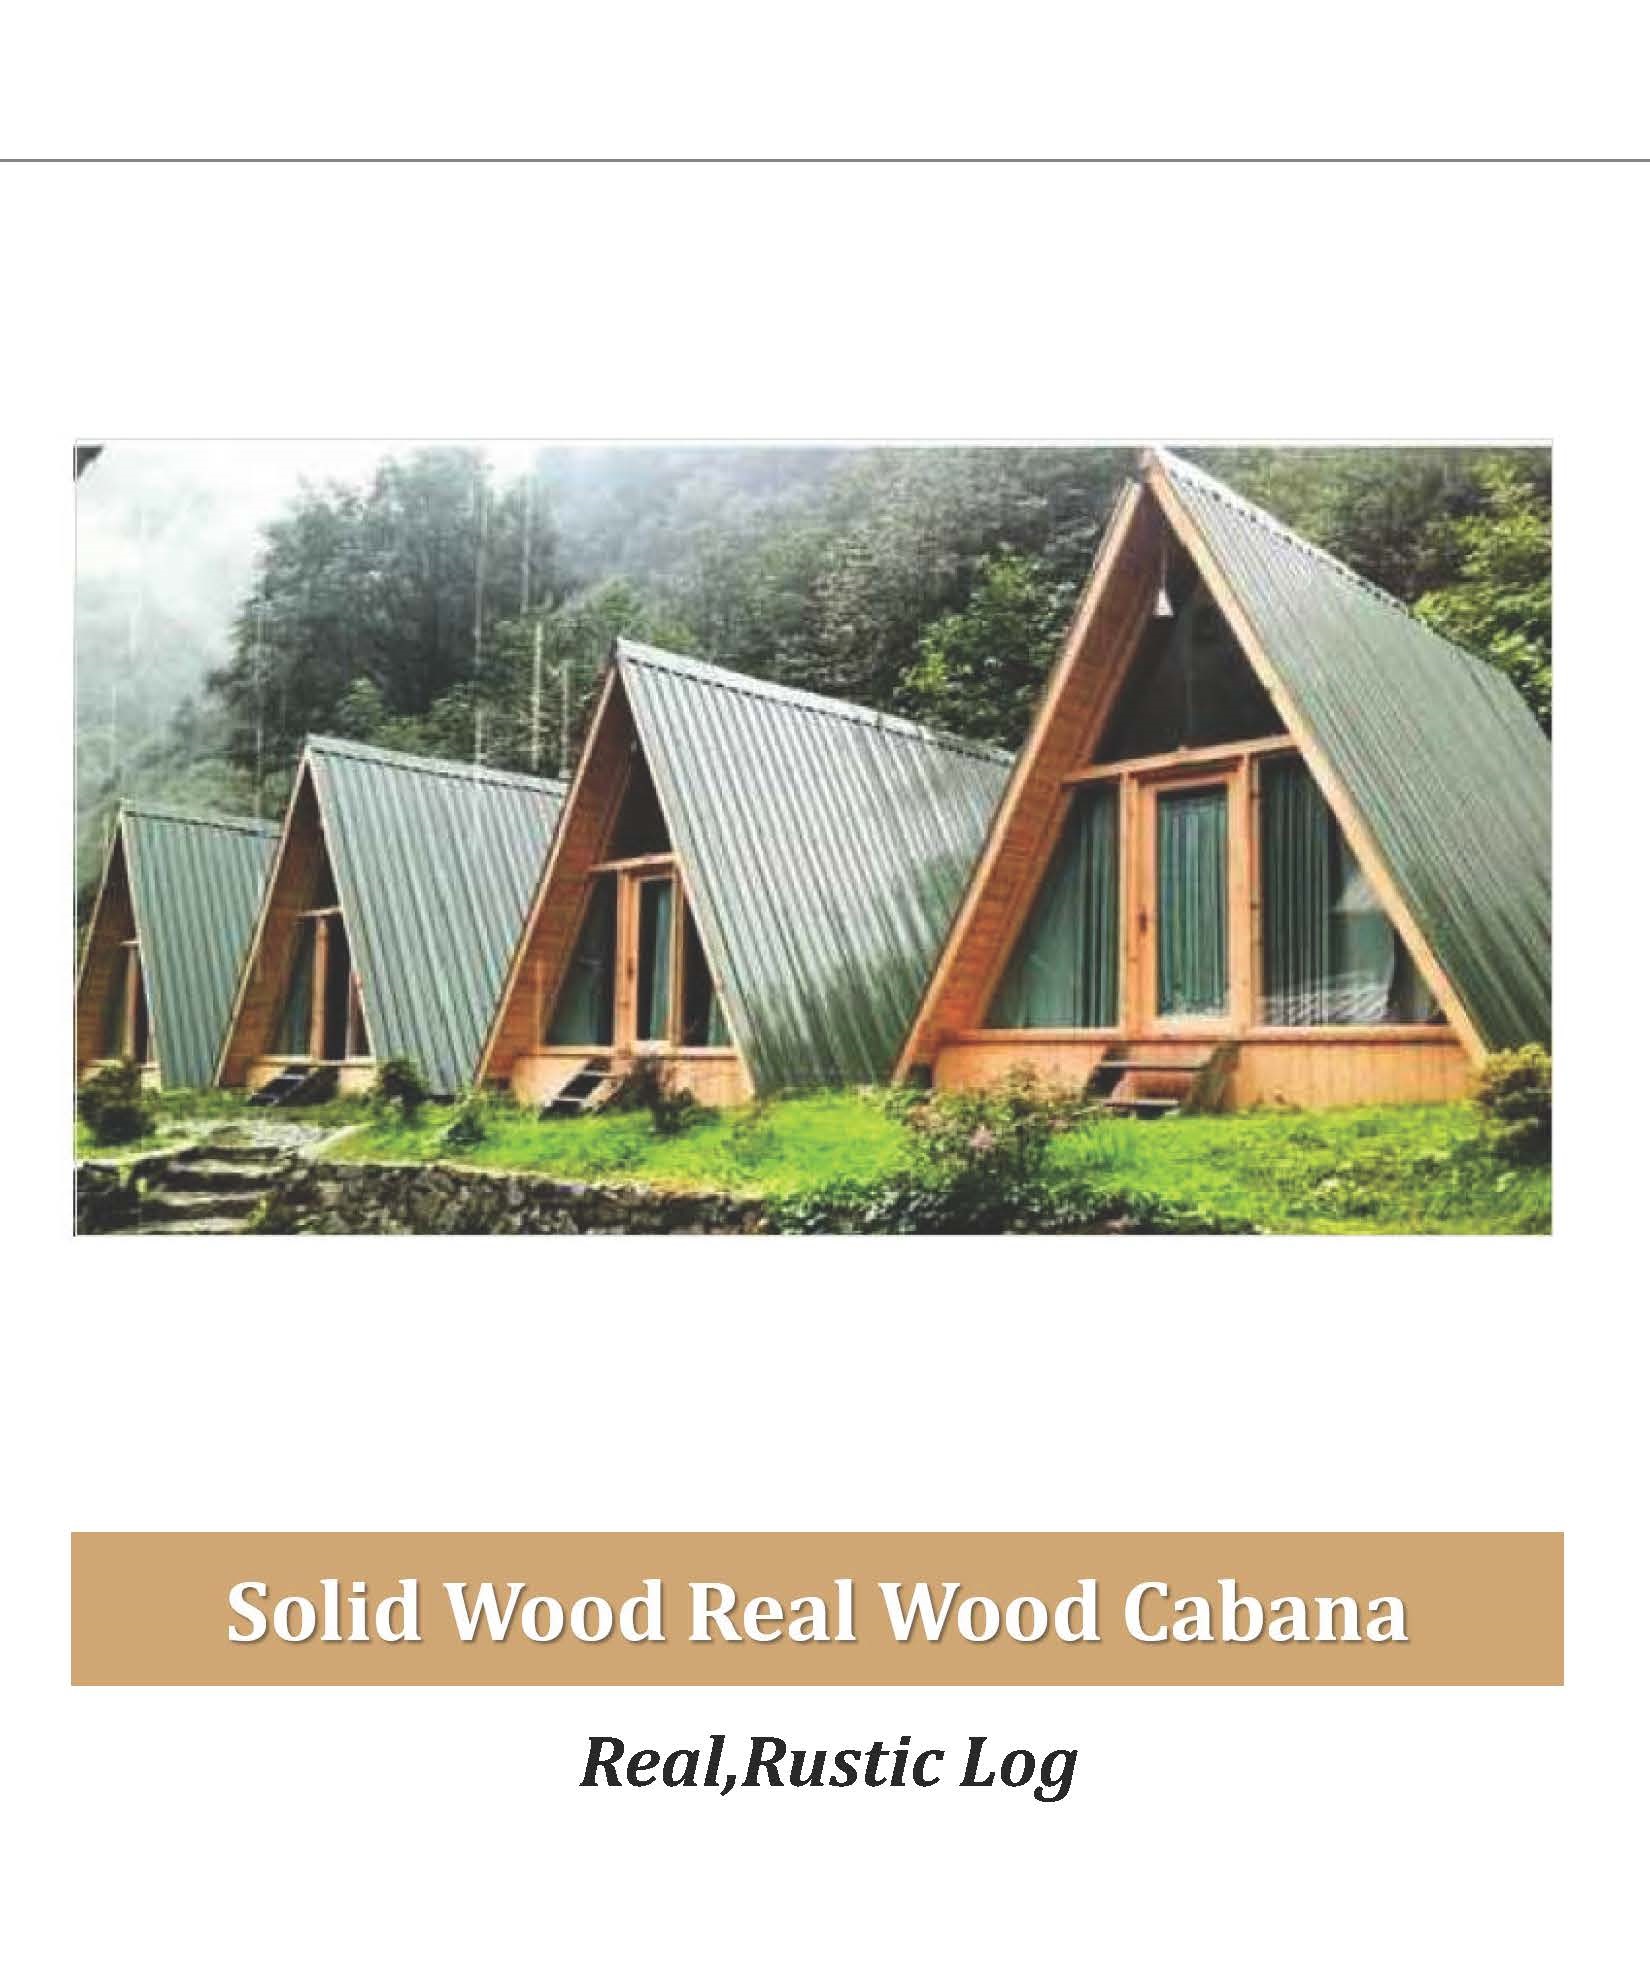 Solid wood real wood cabana